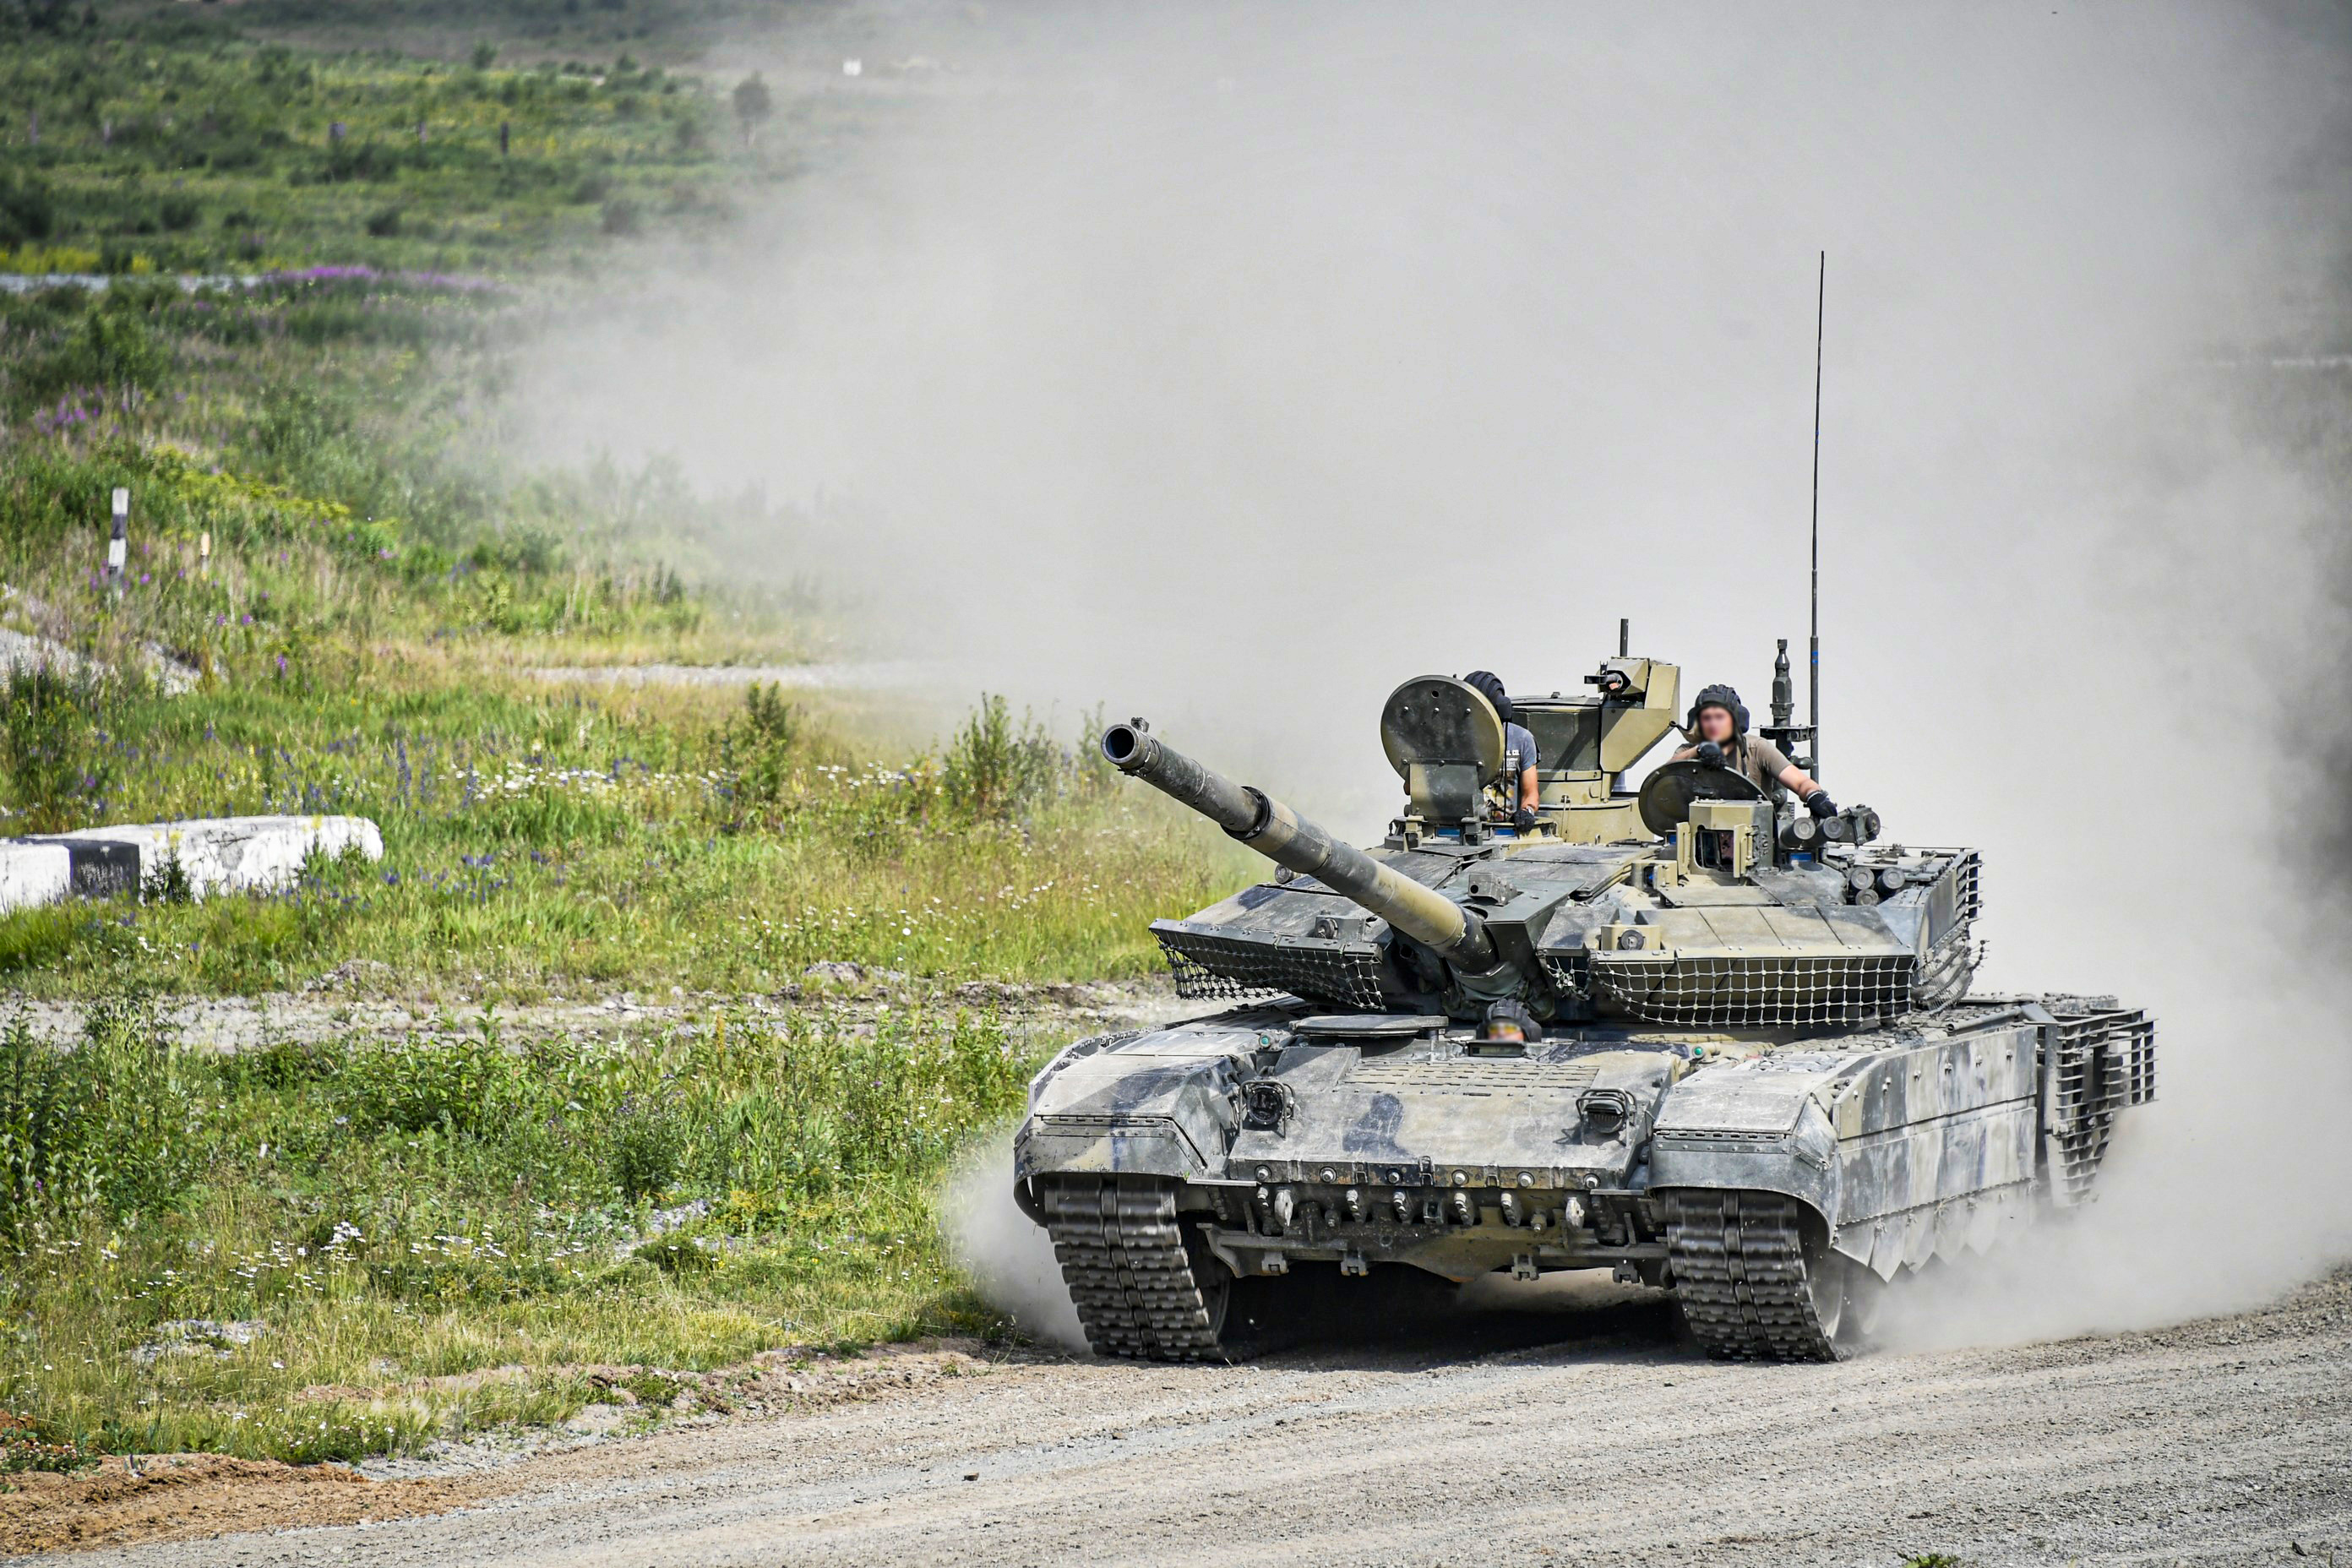 Танк Т-90М: «прорывная» машина